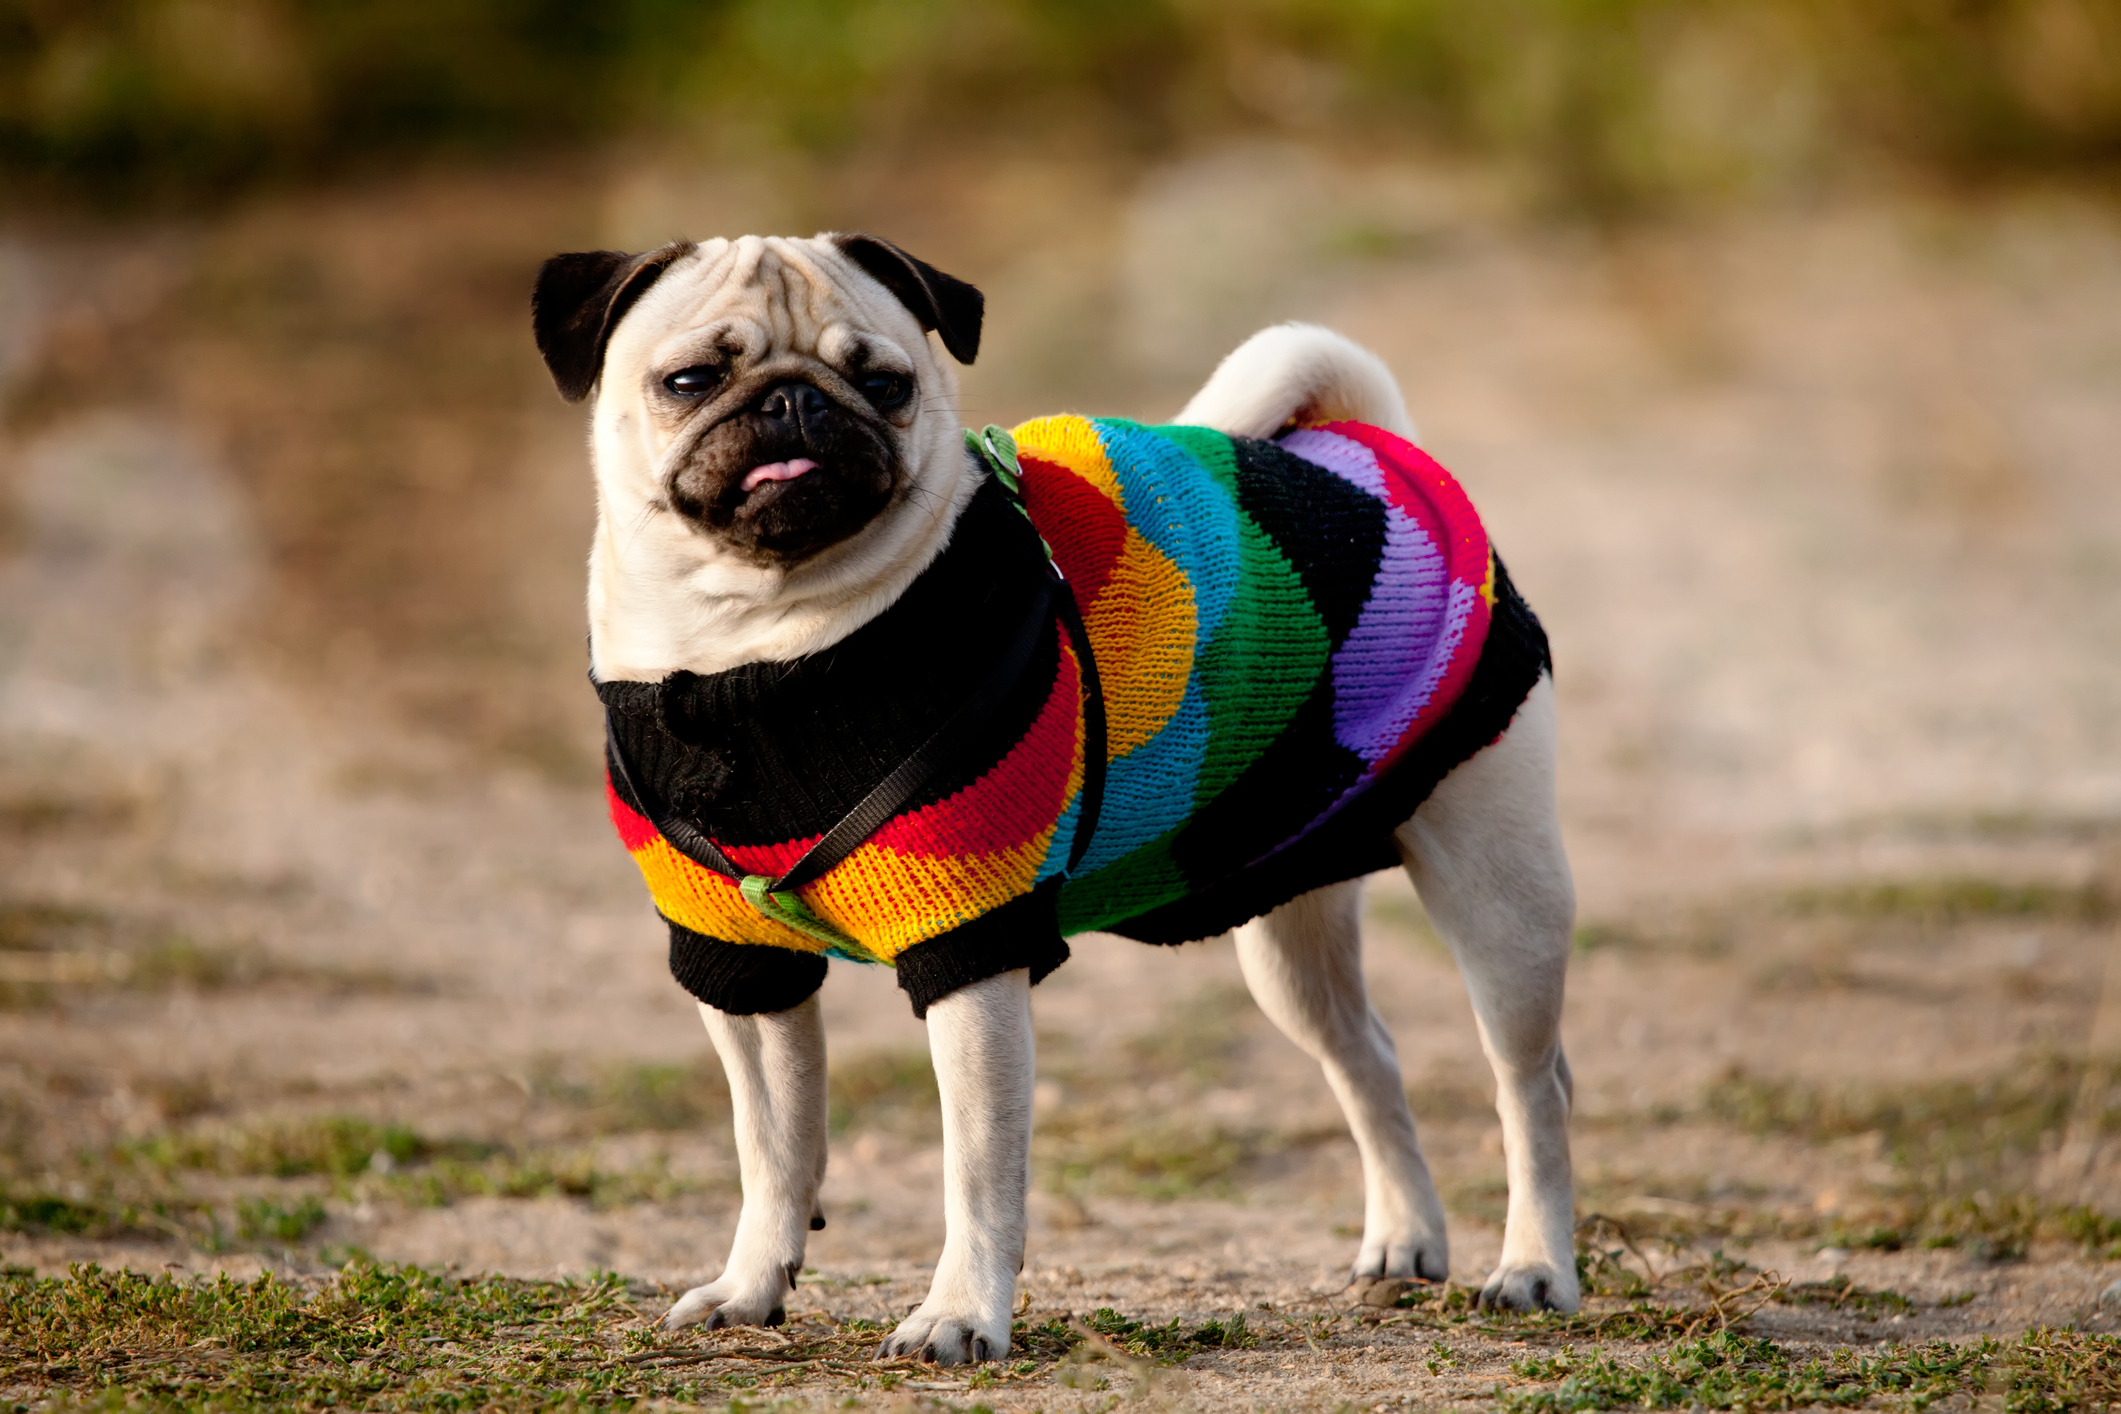 unc dog sweater